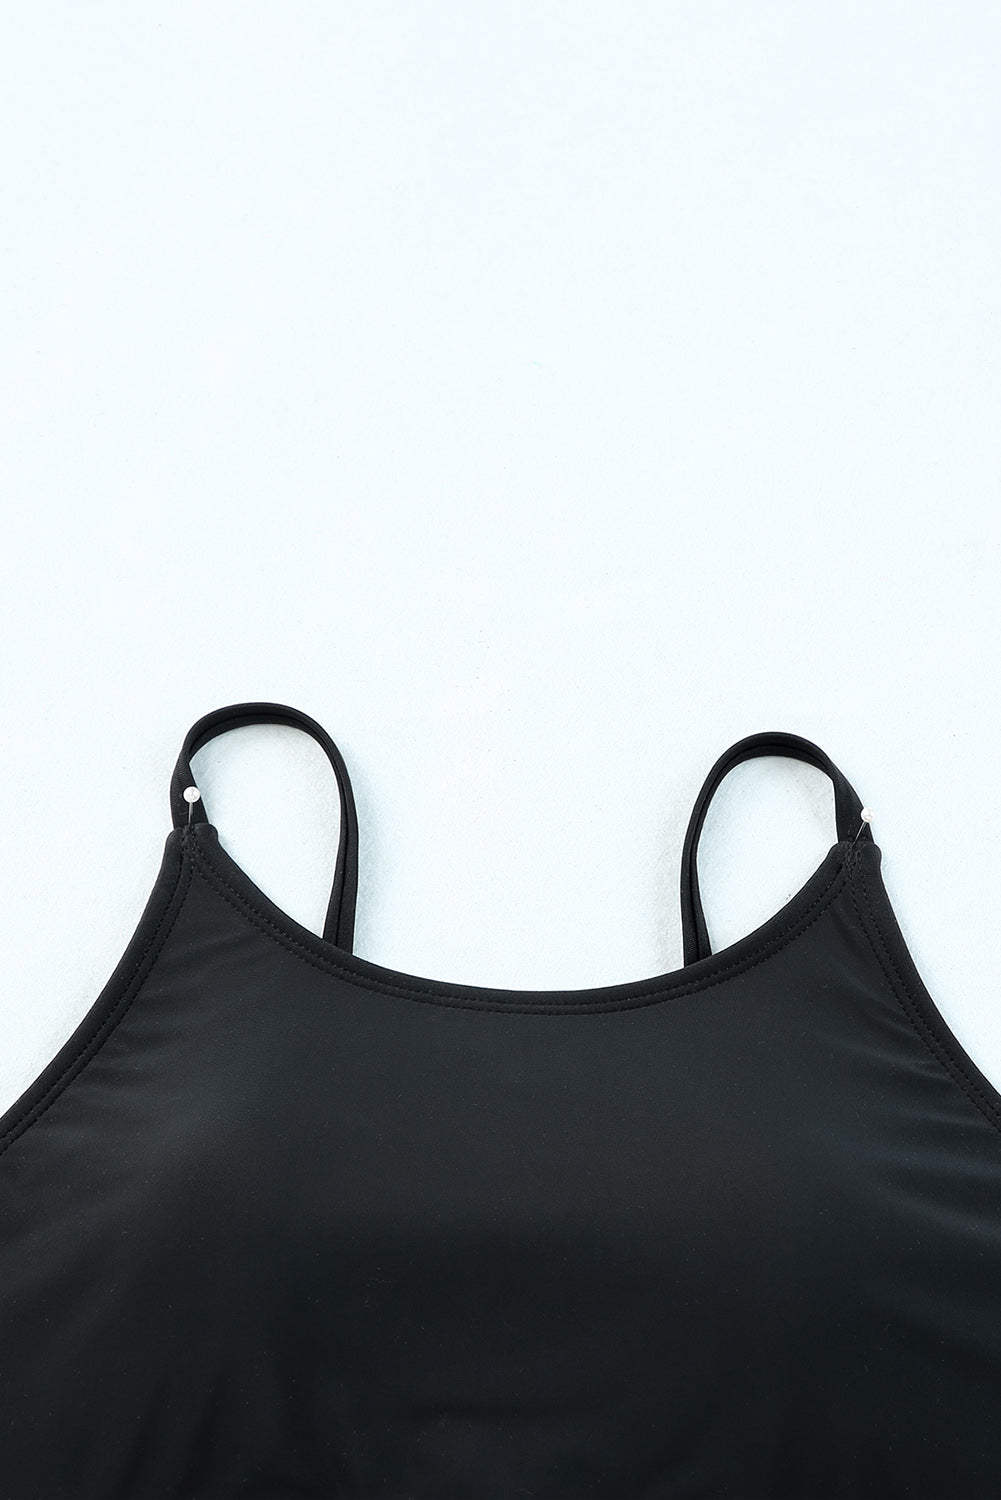 Cali Chic Women Swimsuit Celebrity Black Leopard Mesh Trim 2pcs Bikini